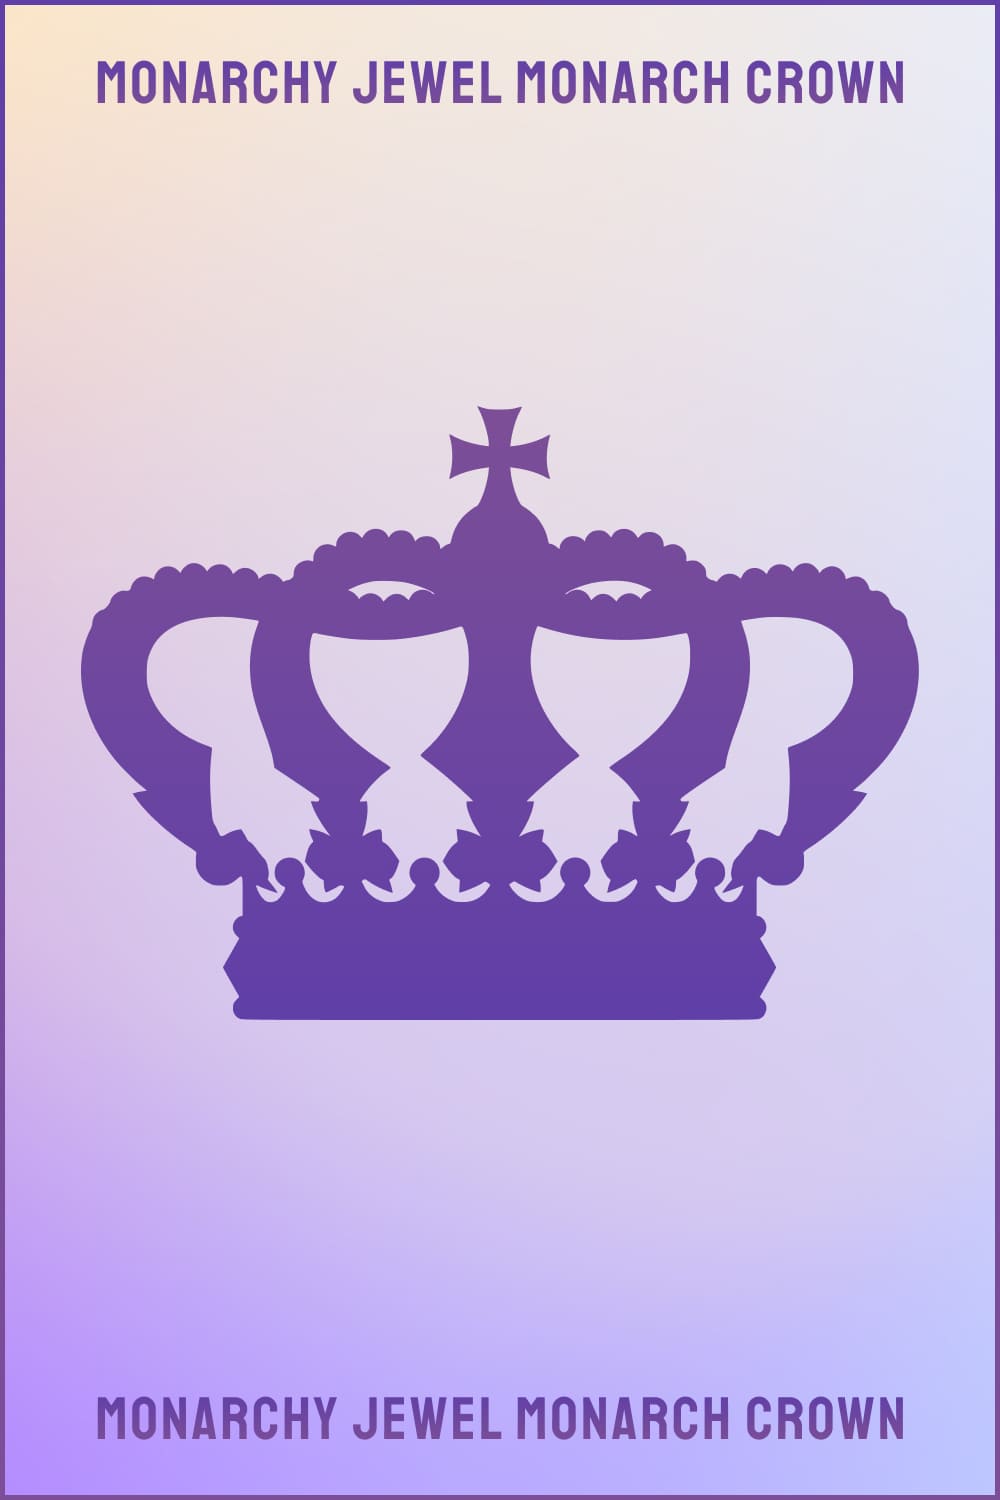 Monarchy Jewel Monarch Crown Pinterest.